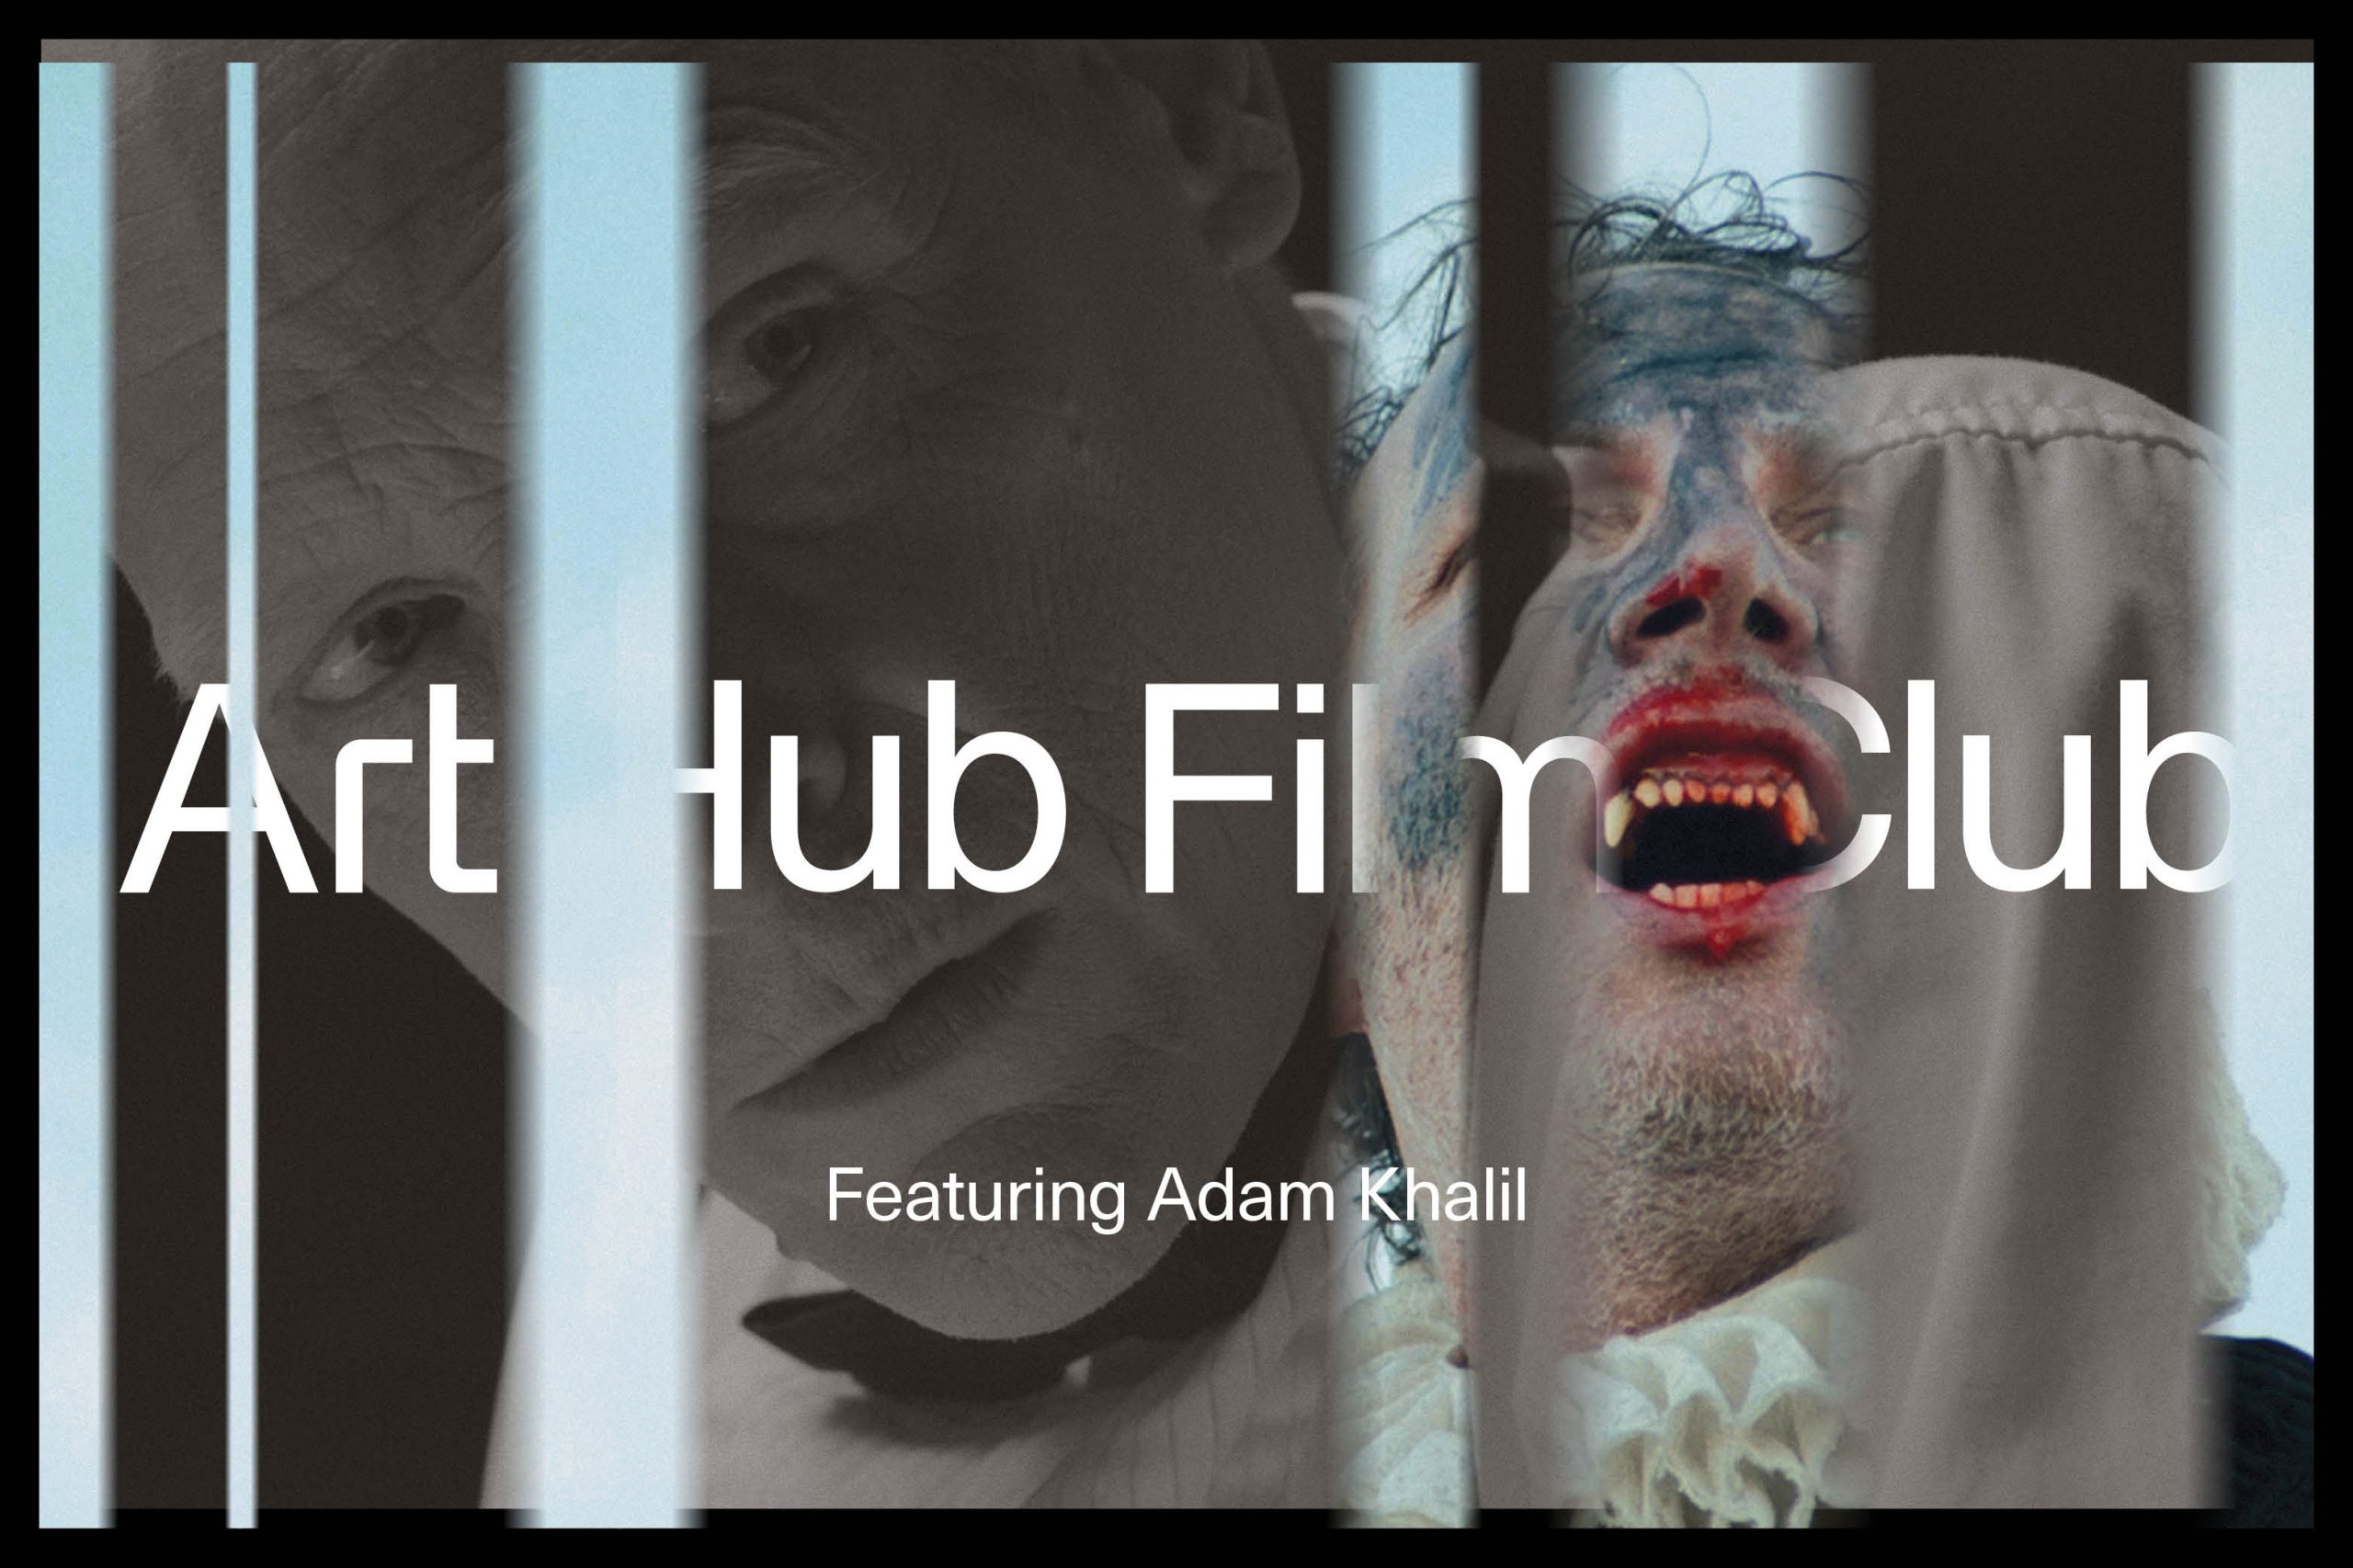 Art Hub Film Club poster